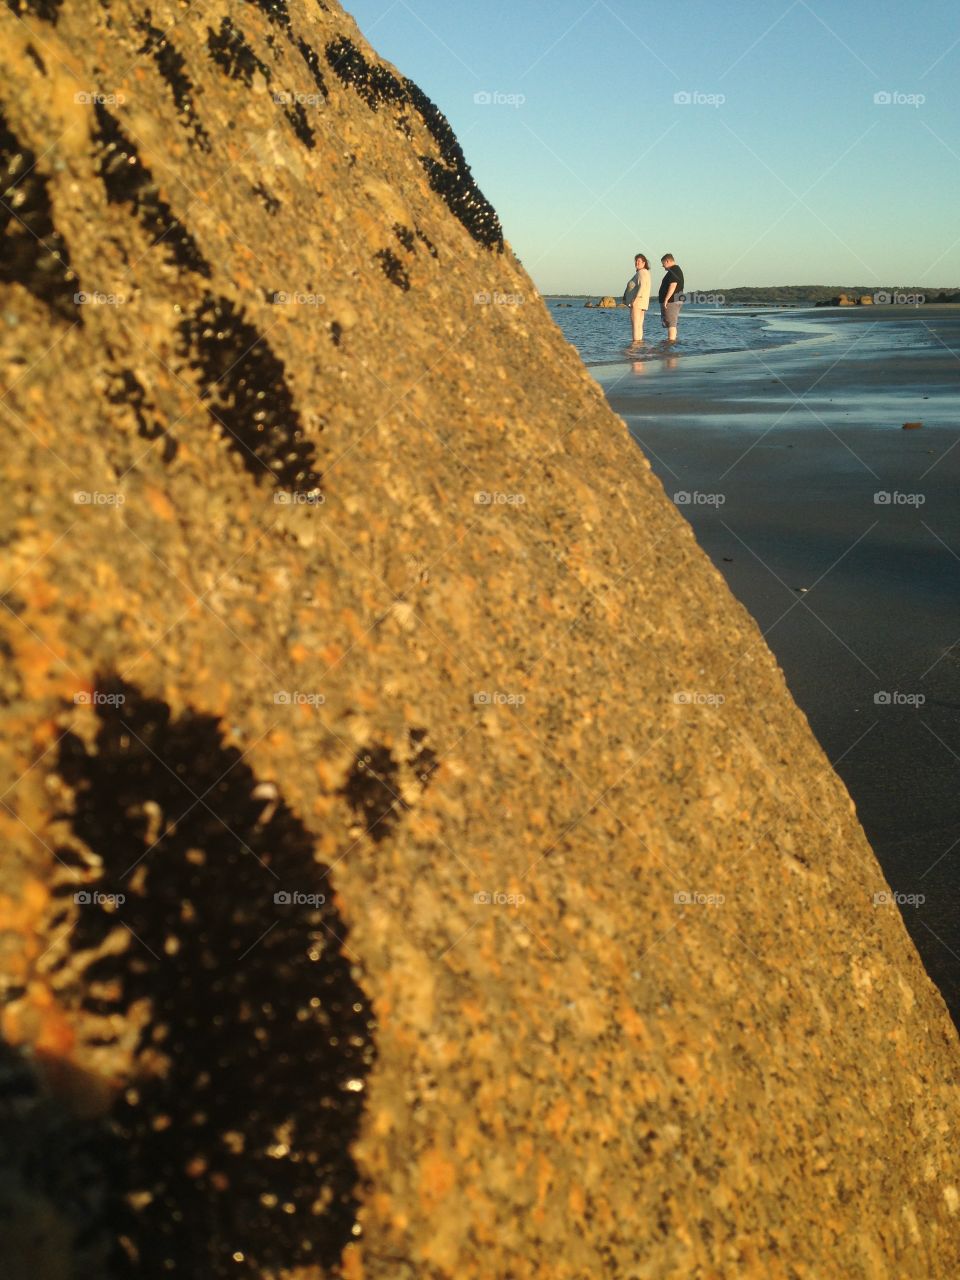 Large rock on beach in ocean sea water with crustaceans 